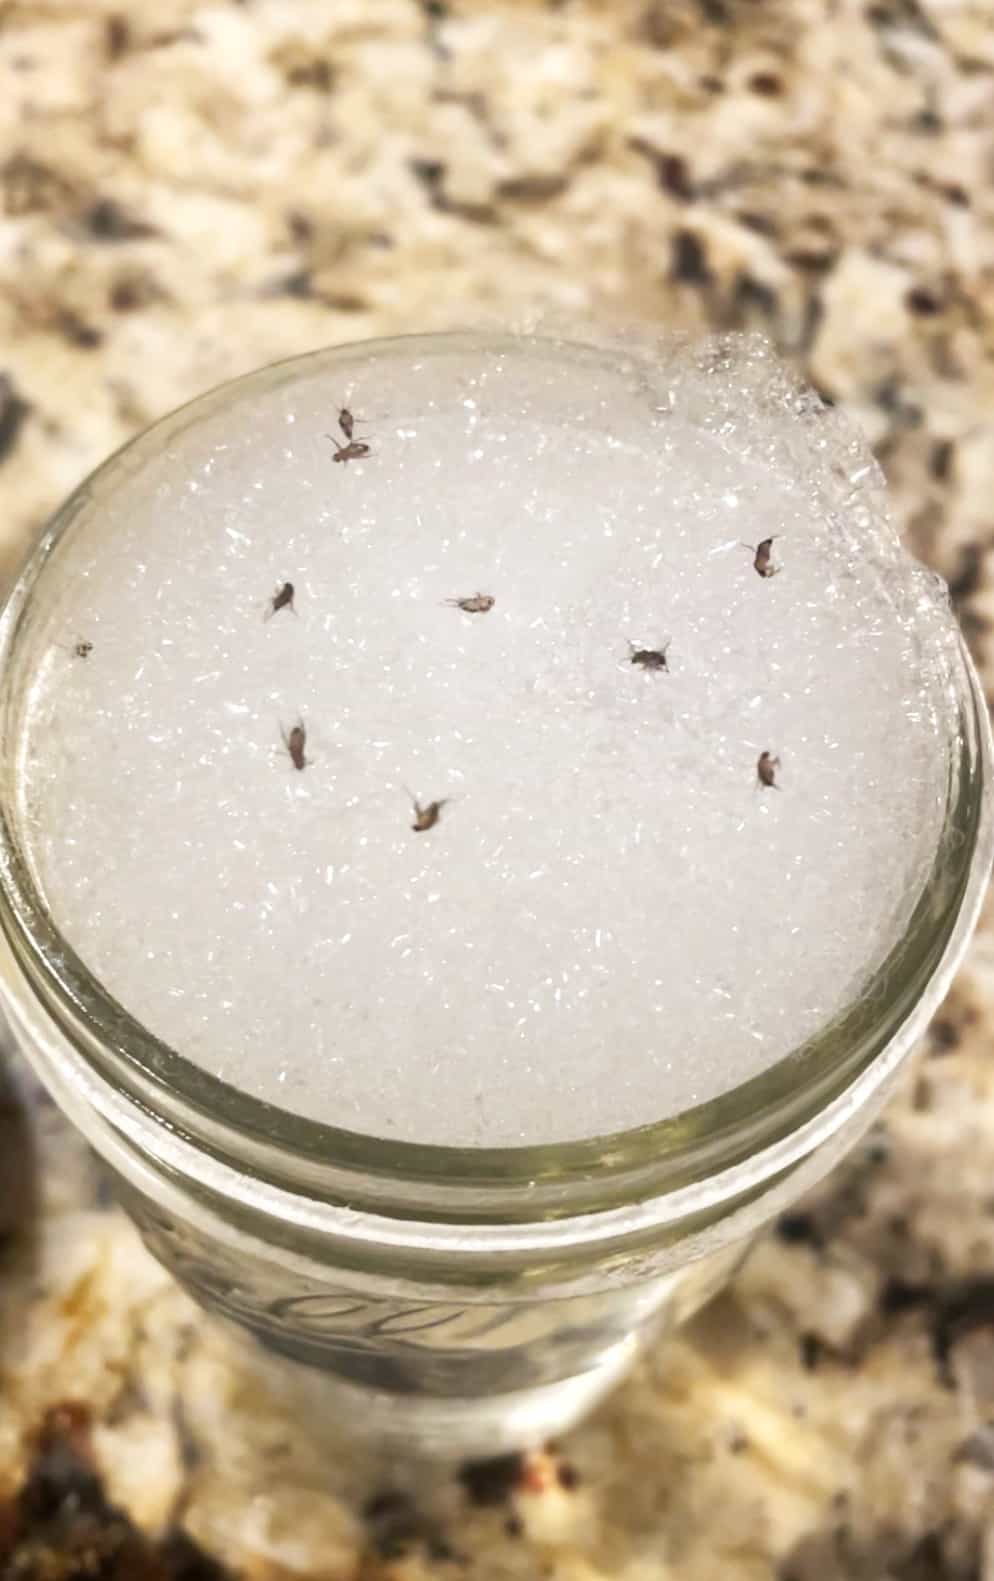 Dead fruit flies on top of soapy bubbles in a mason jar.